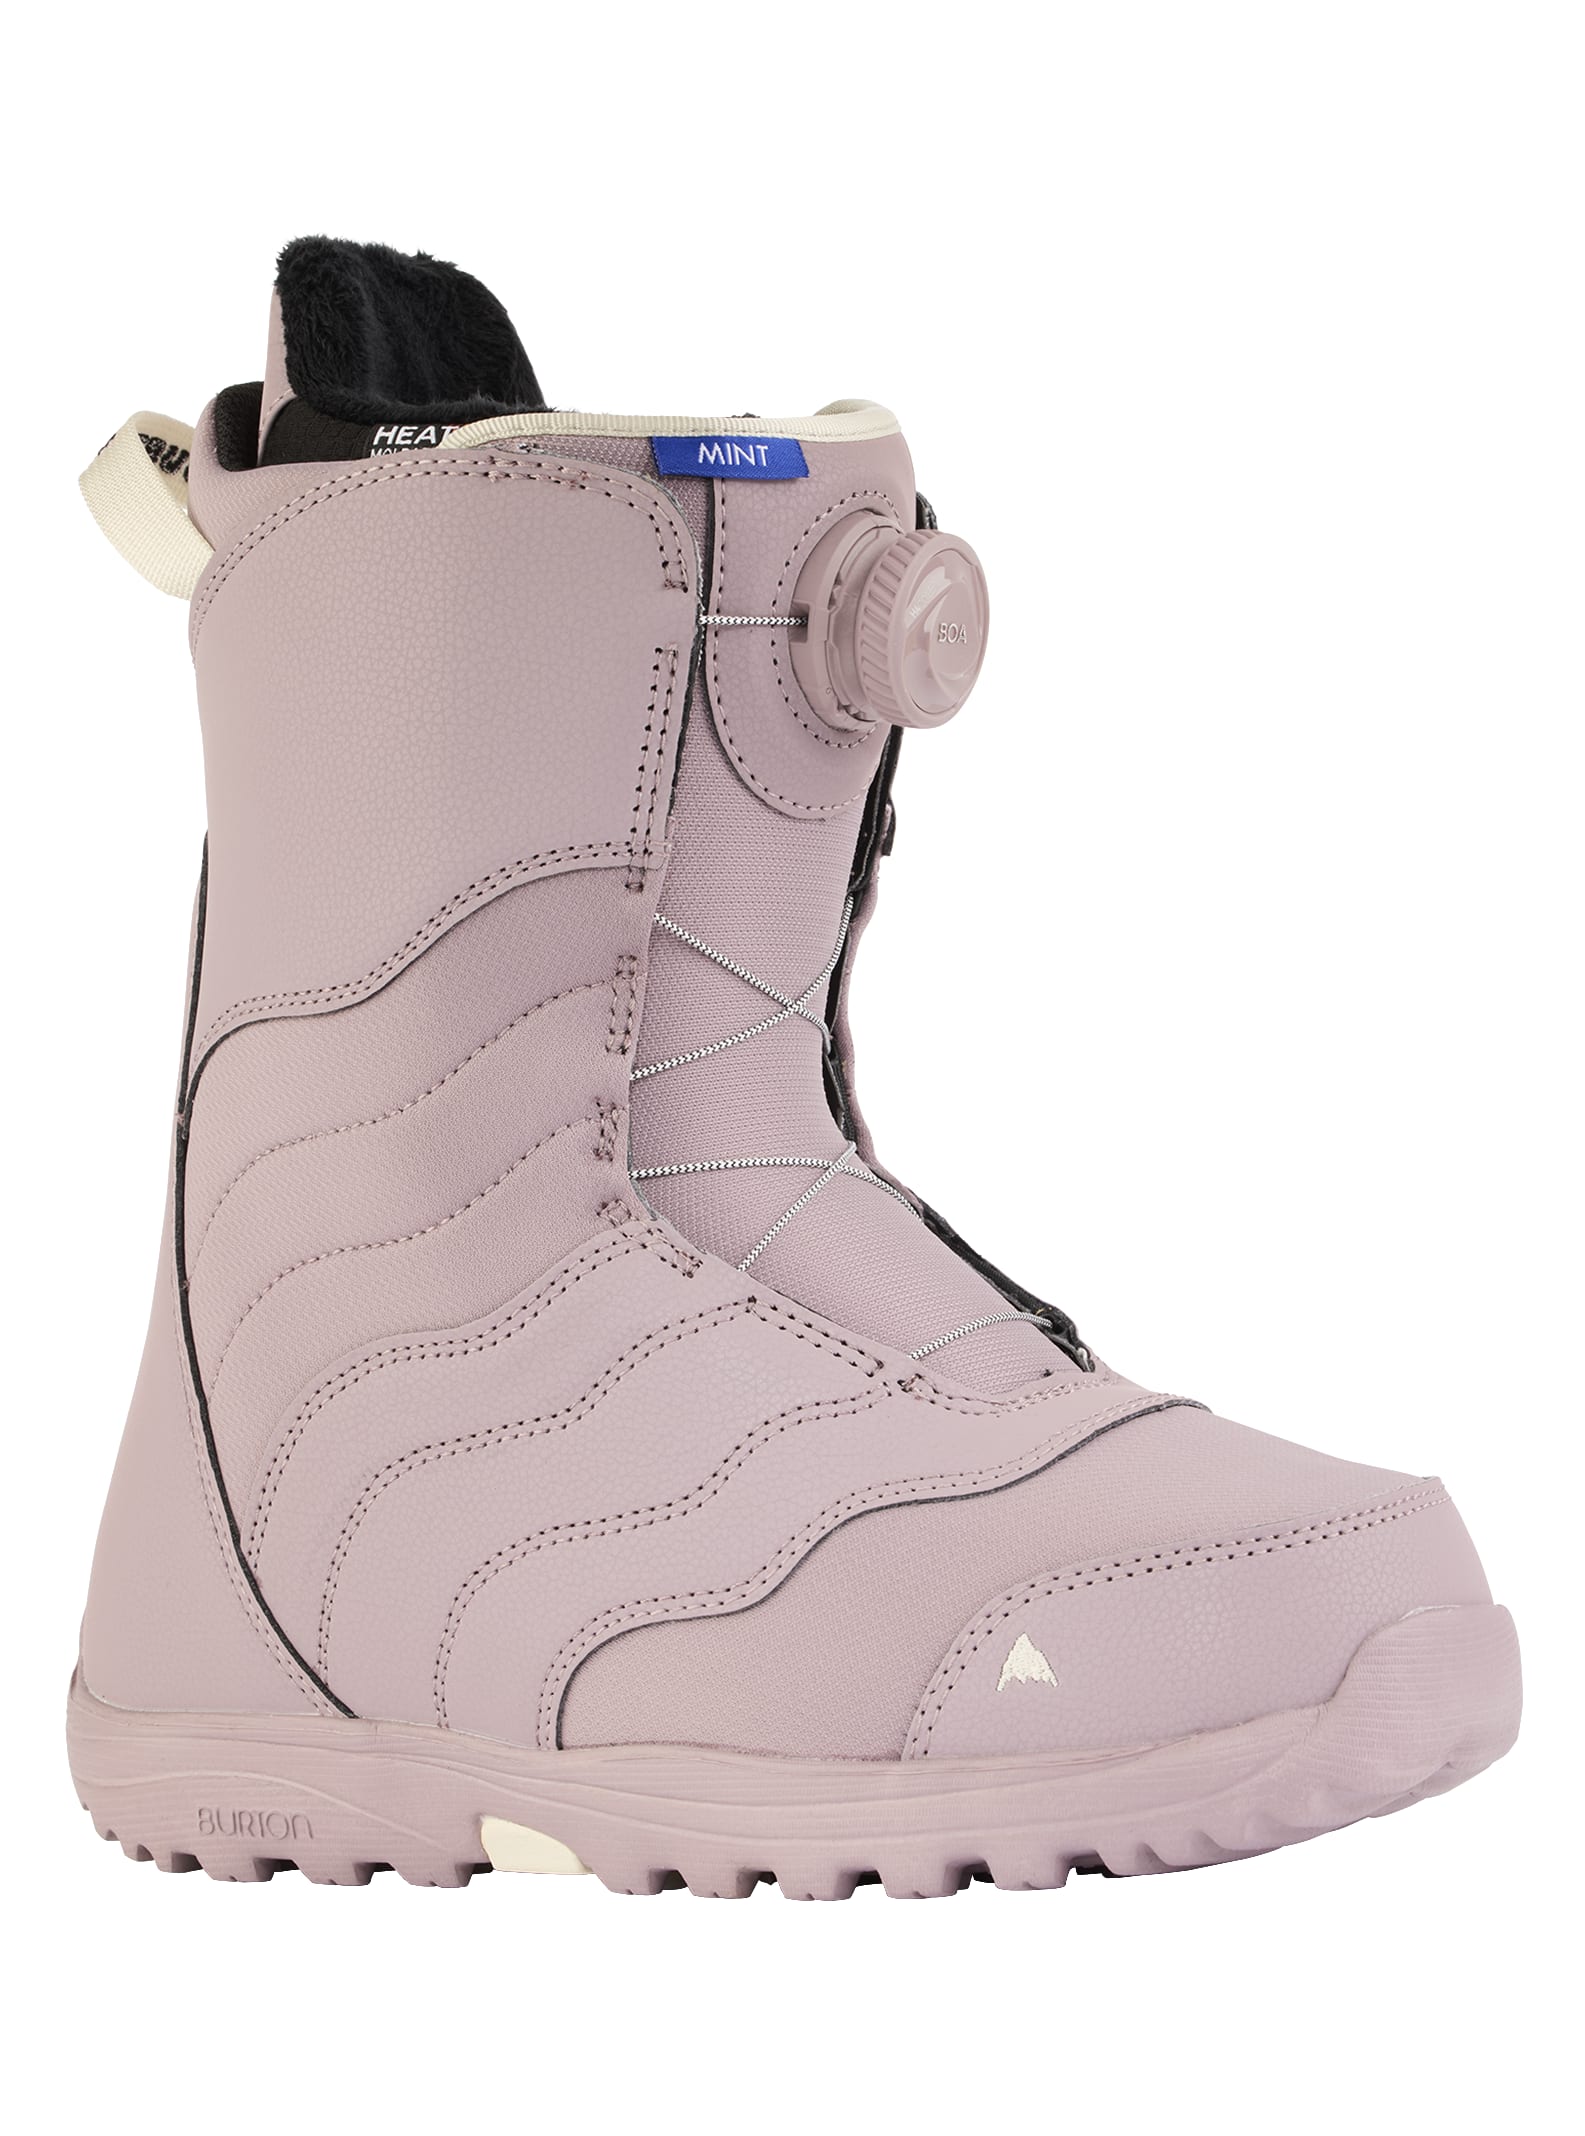 Women's Mint BOA® Snowboard Boots | Burton.com 2023 US